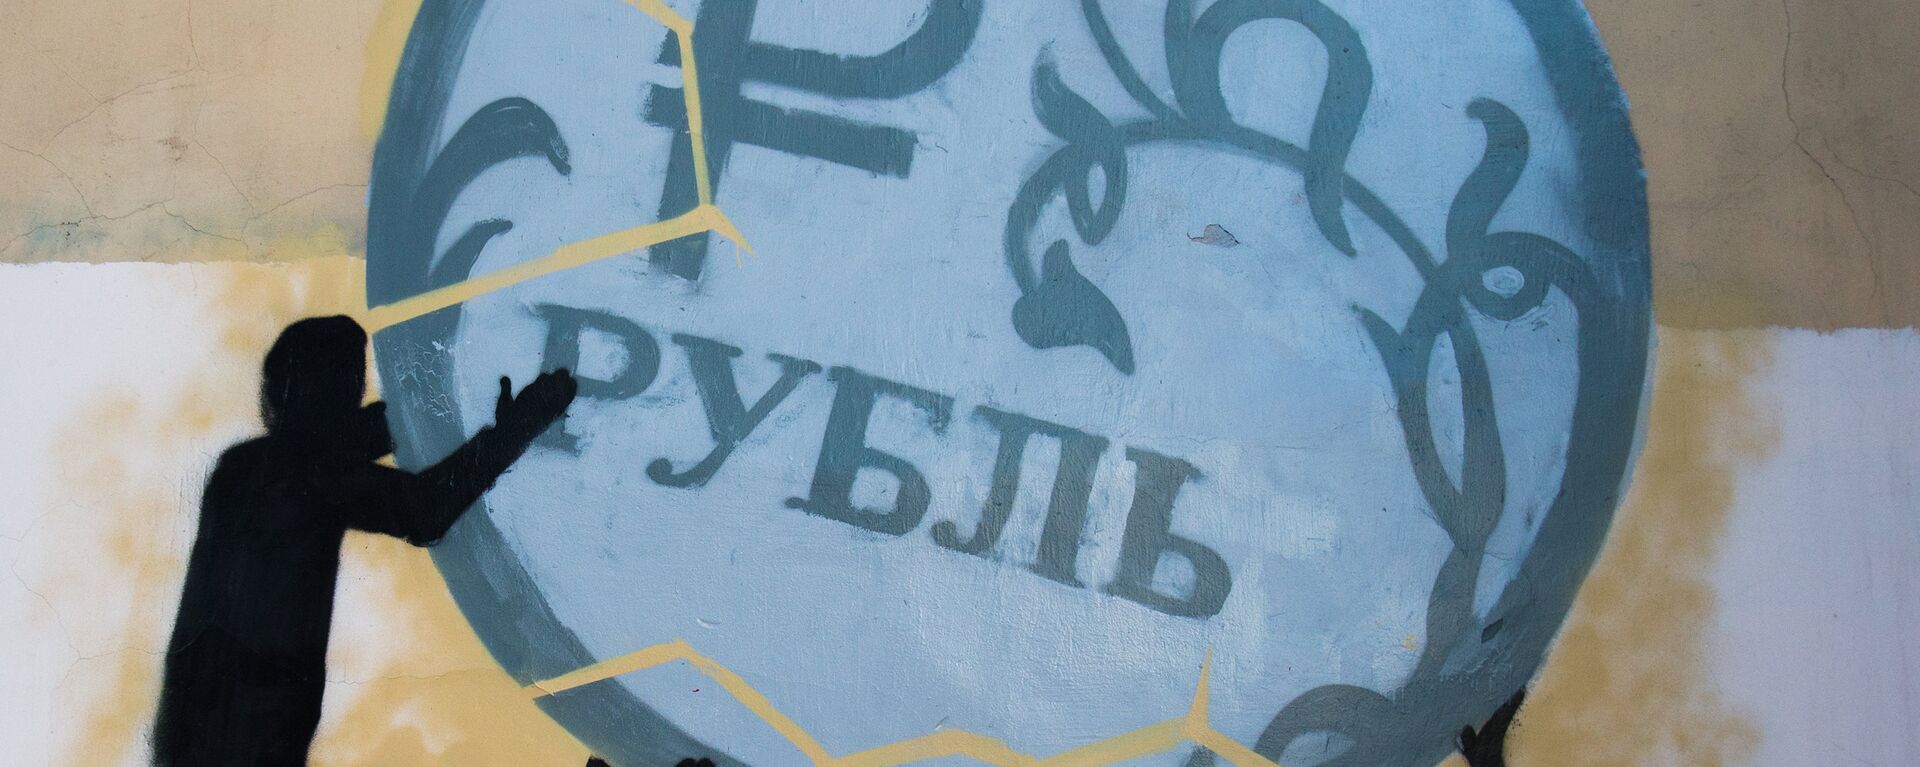 Grafit podrške rublji u Sankt Peterburgu - Sputnik Srbija, 1920, 28.03.2022